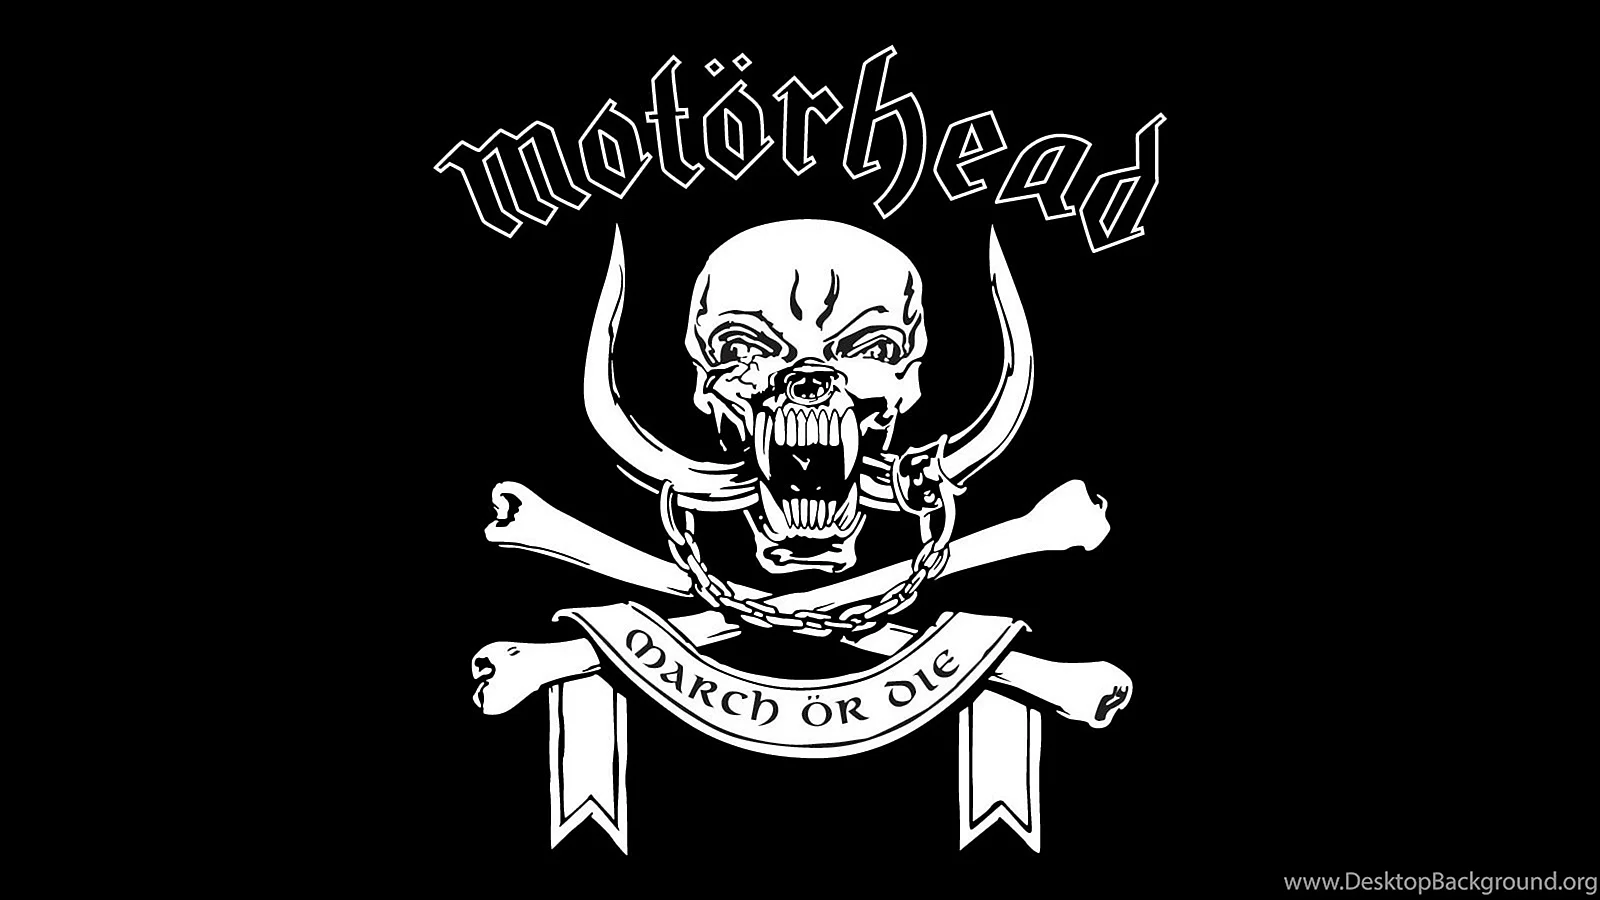 Motorhead Logo Wallpaper